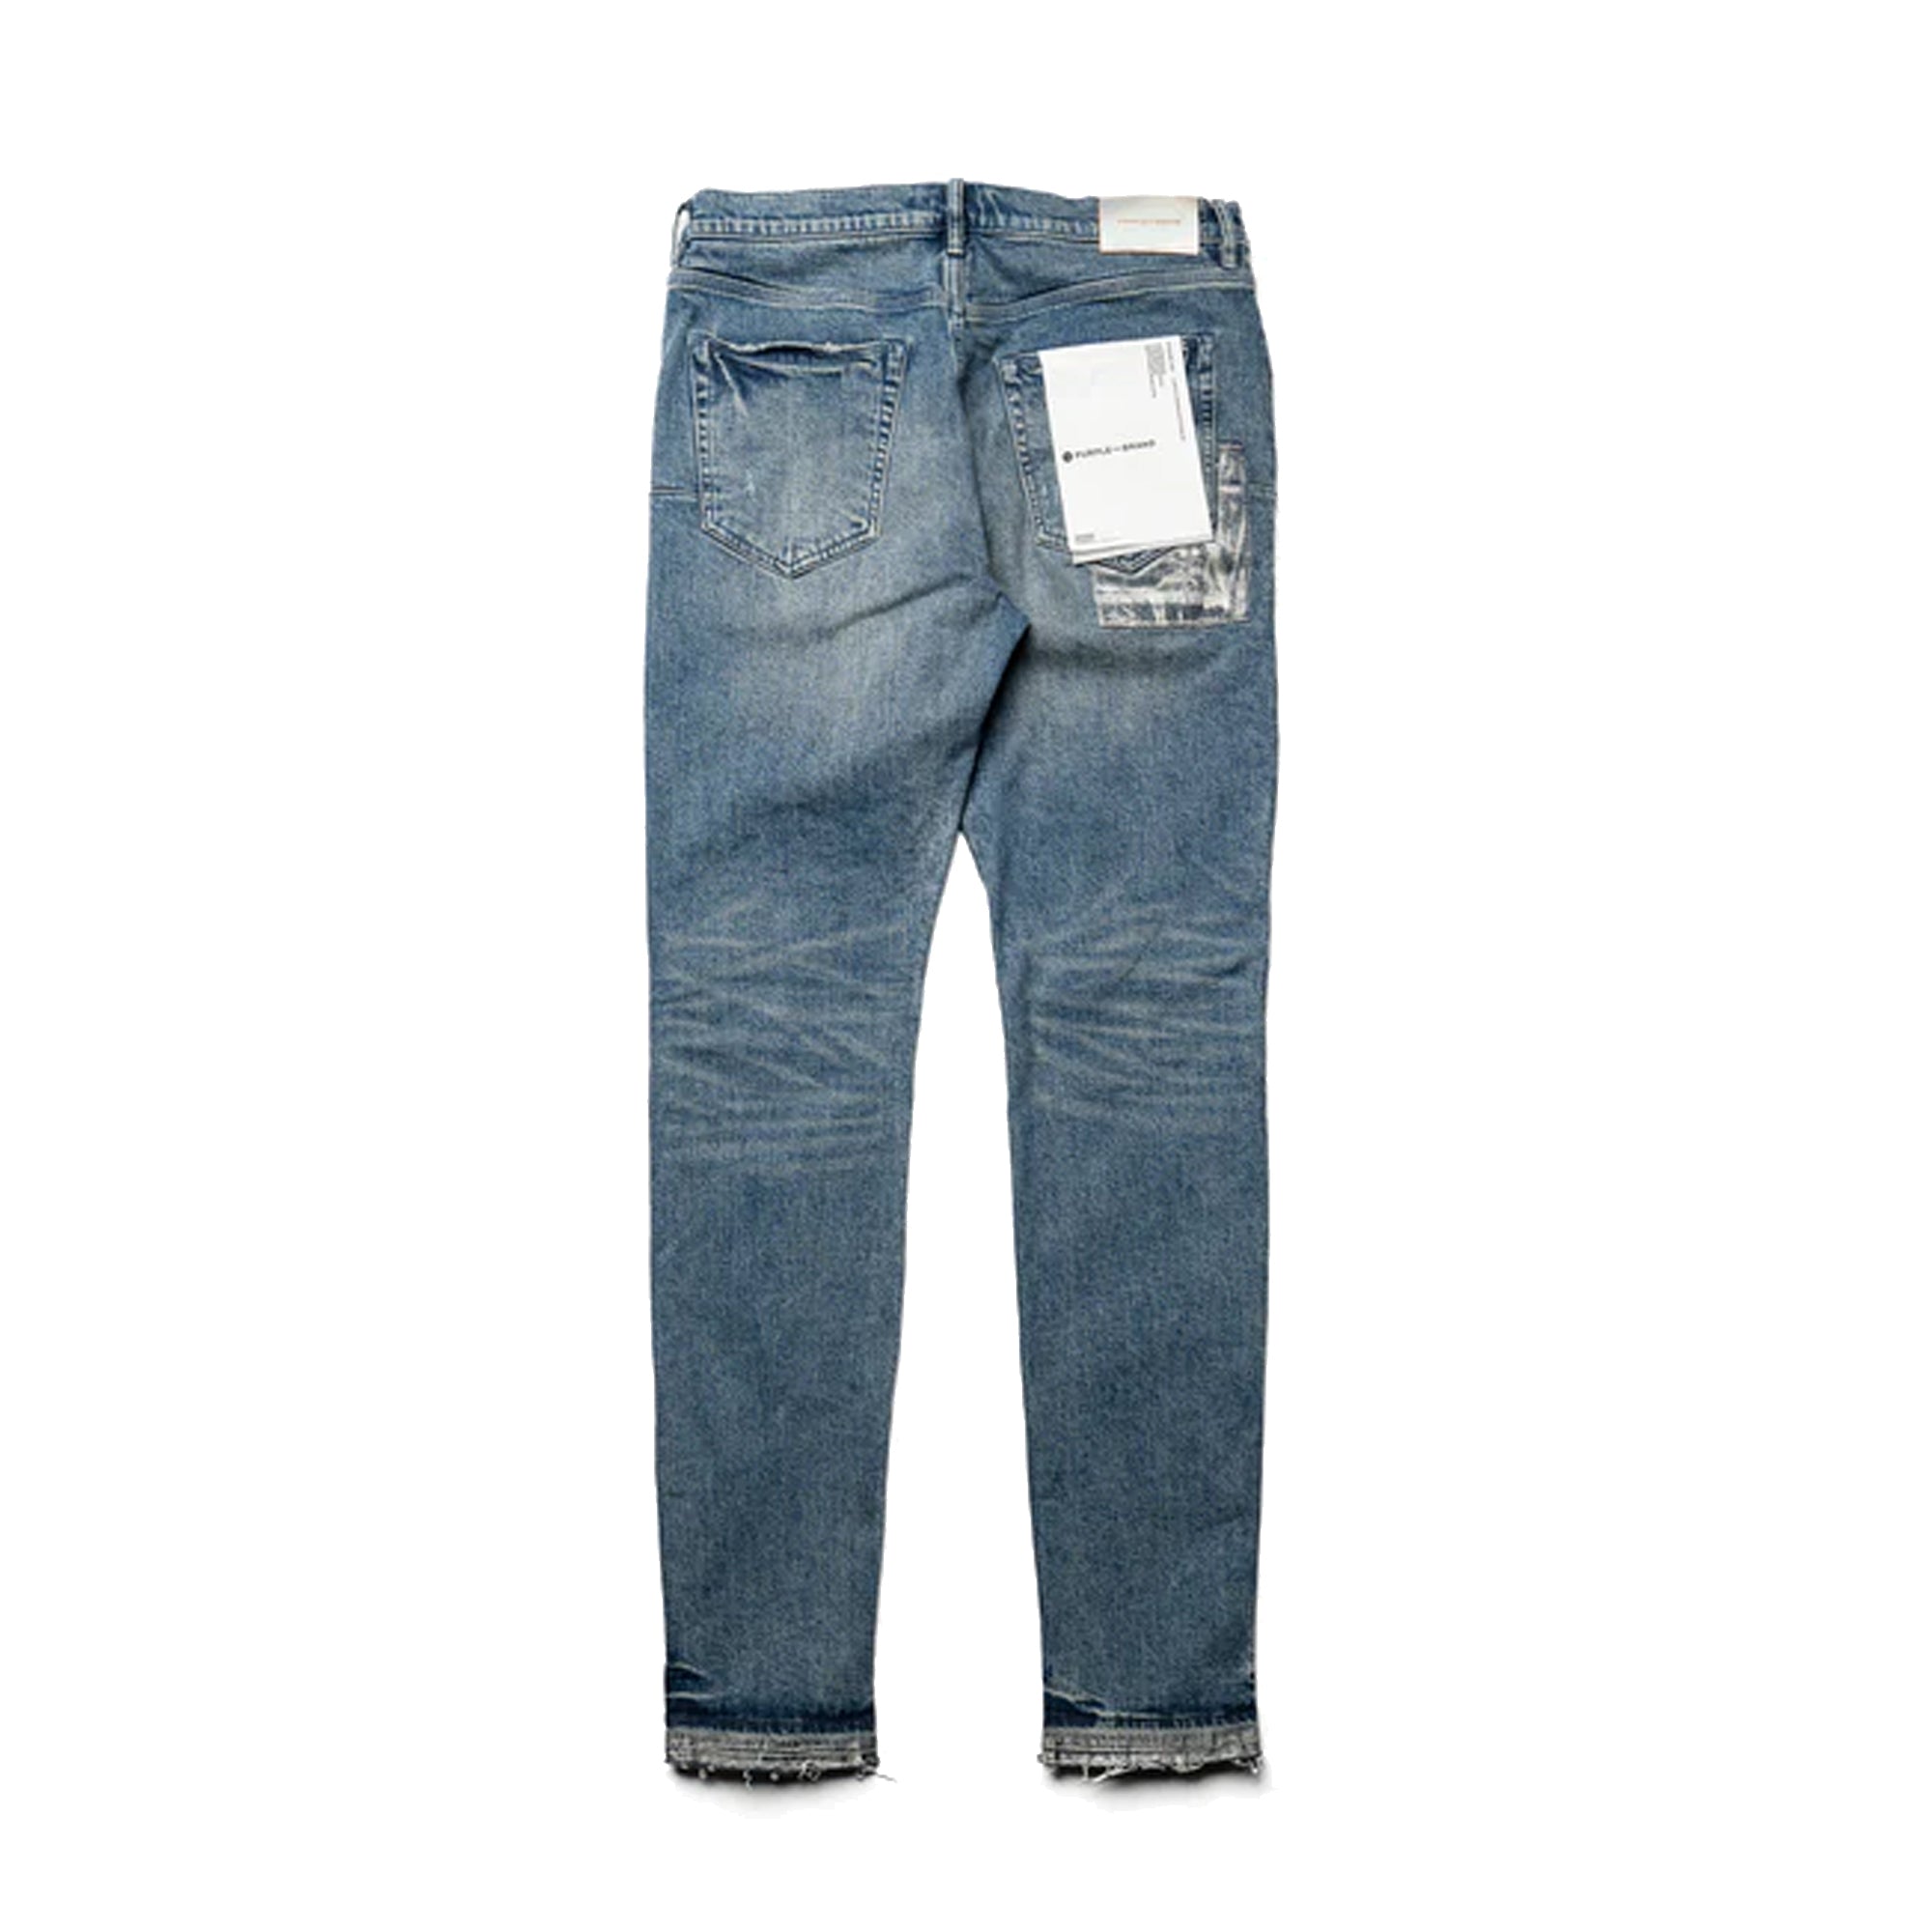 NWT PURPLE BRAND Indigo Oil Repair Skinny Jeans Size 38/48 $275